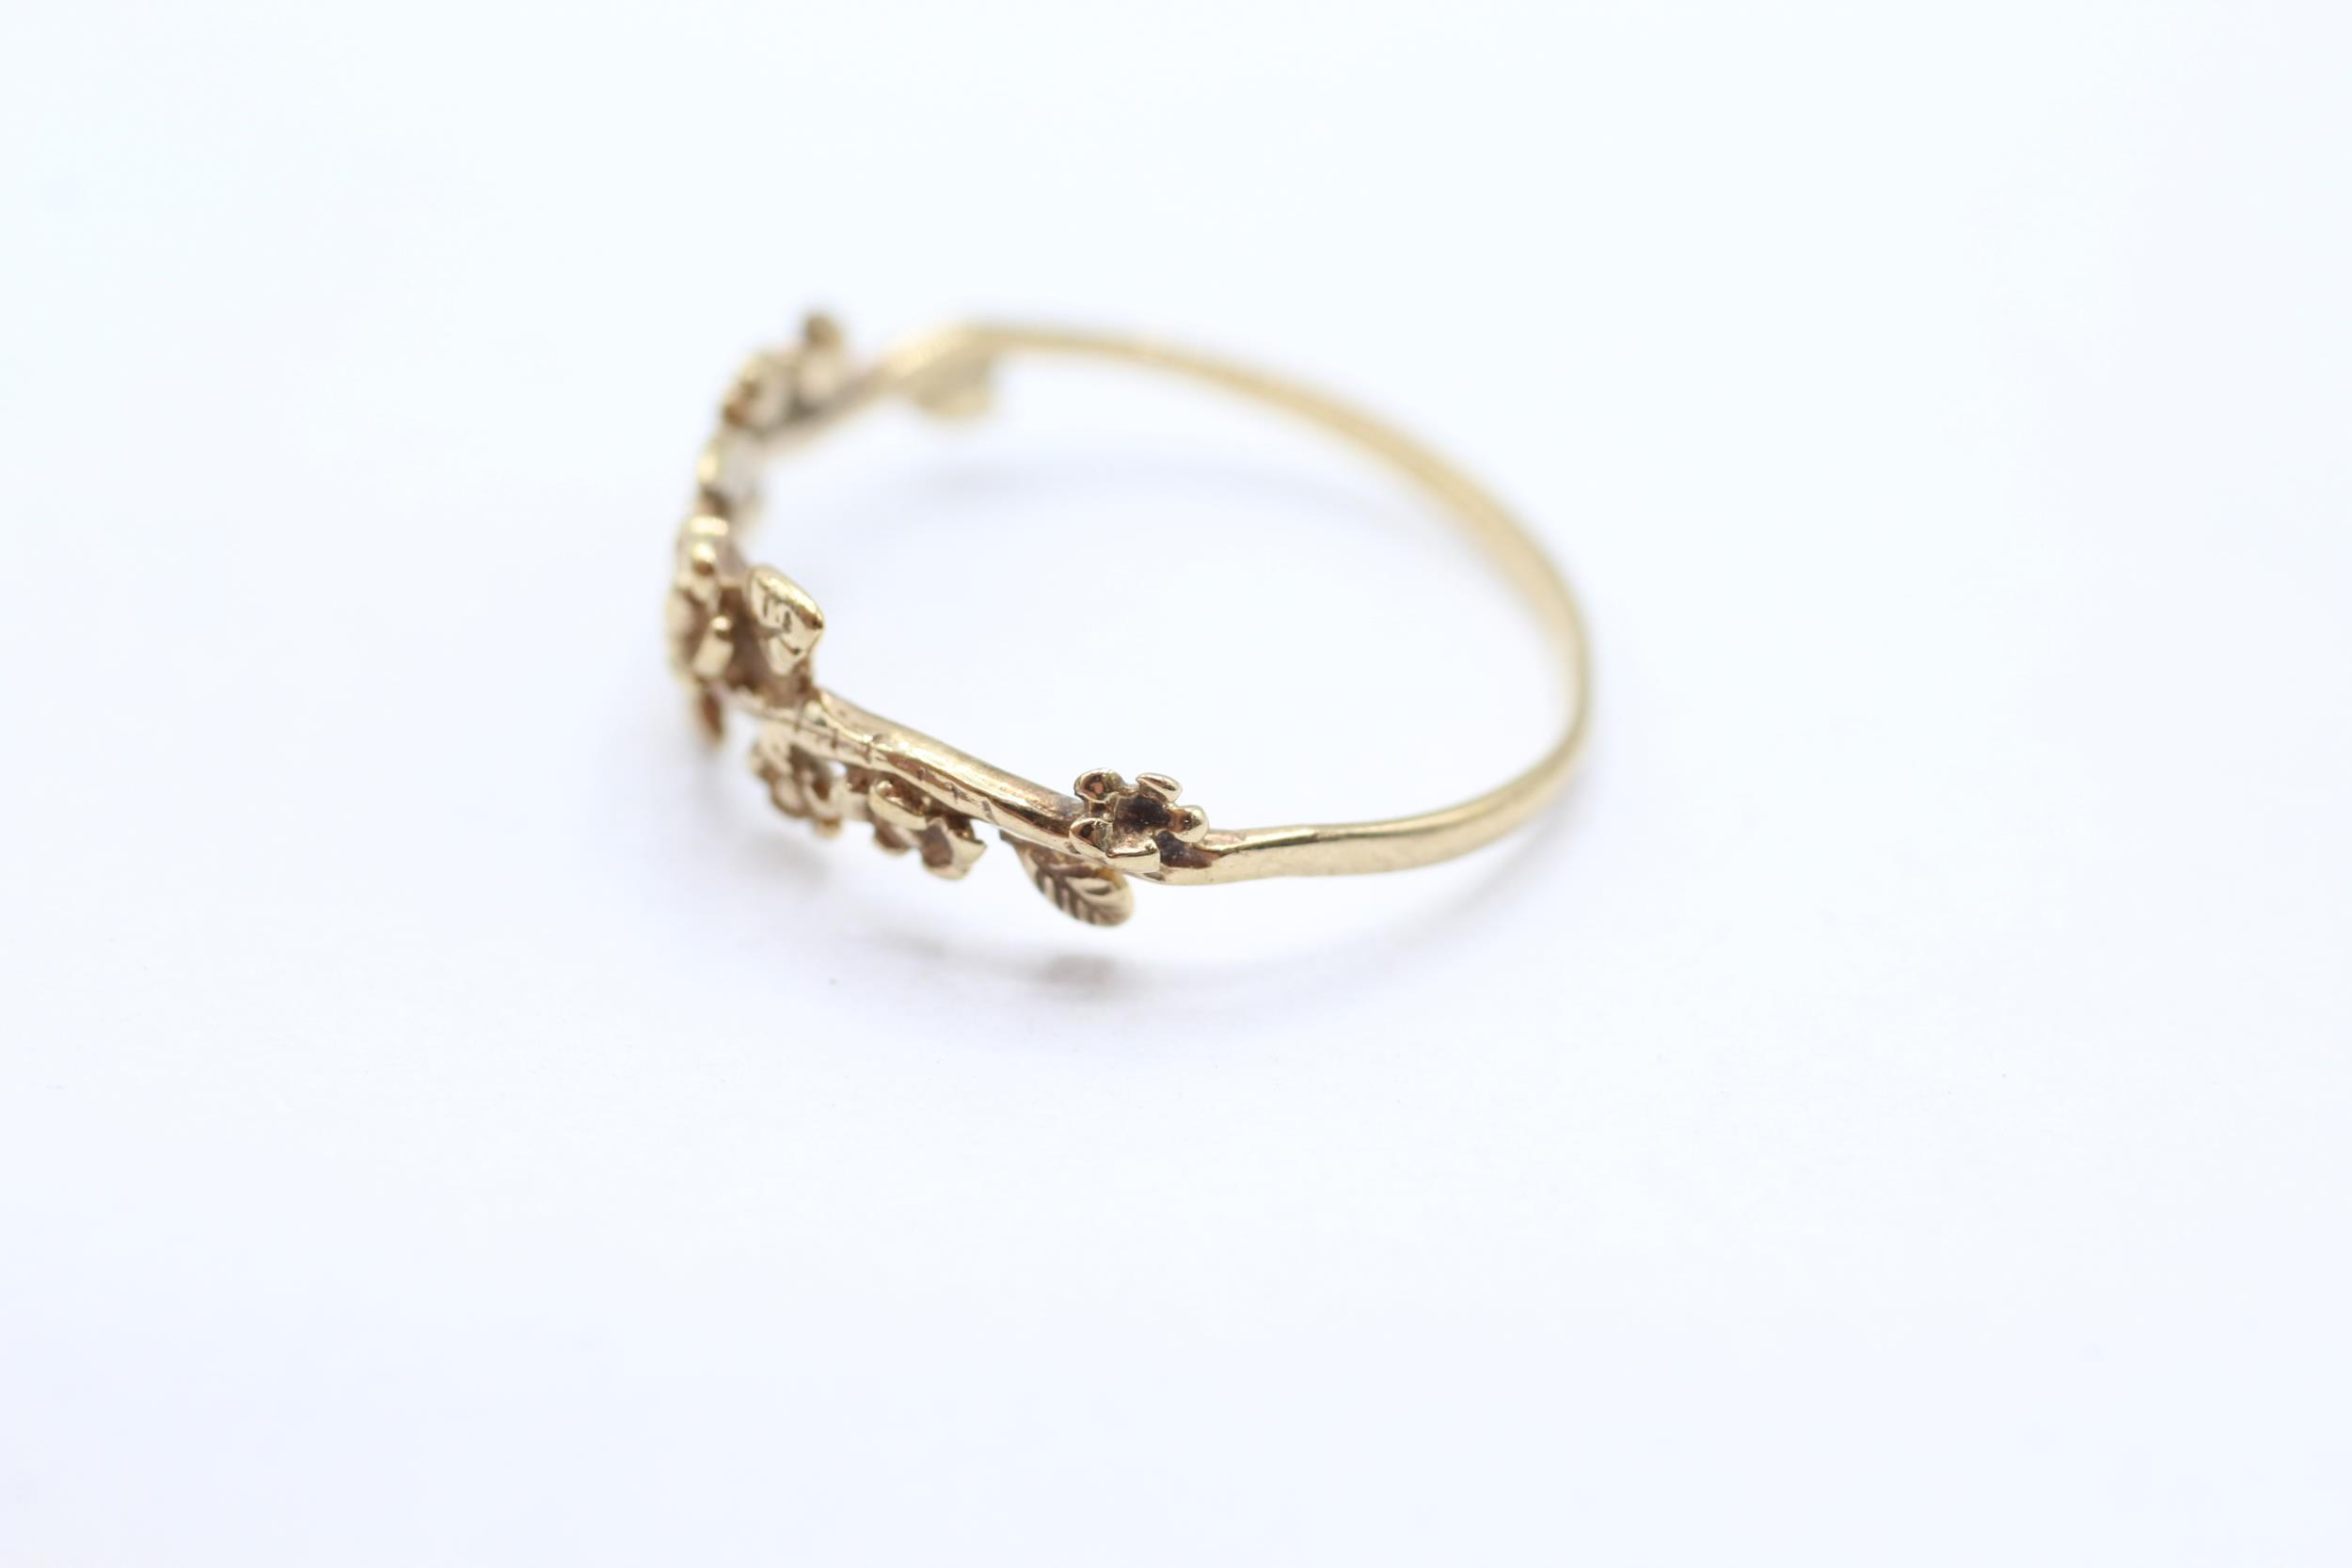 9ct gold vintage floral patterned ring Size O 1 g - Image 4 of 5